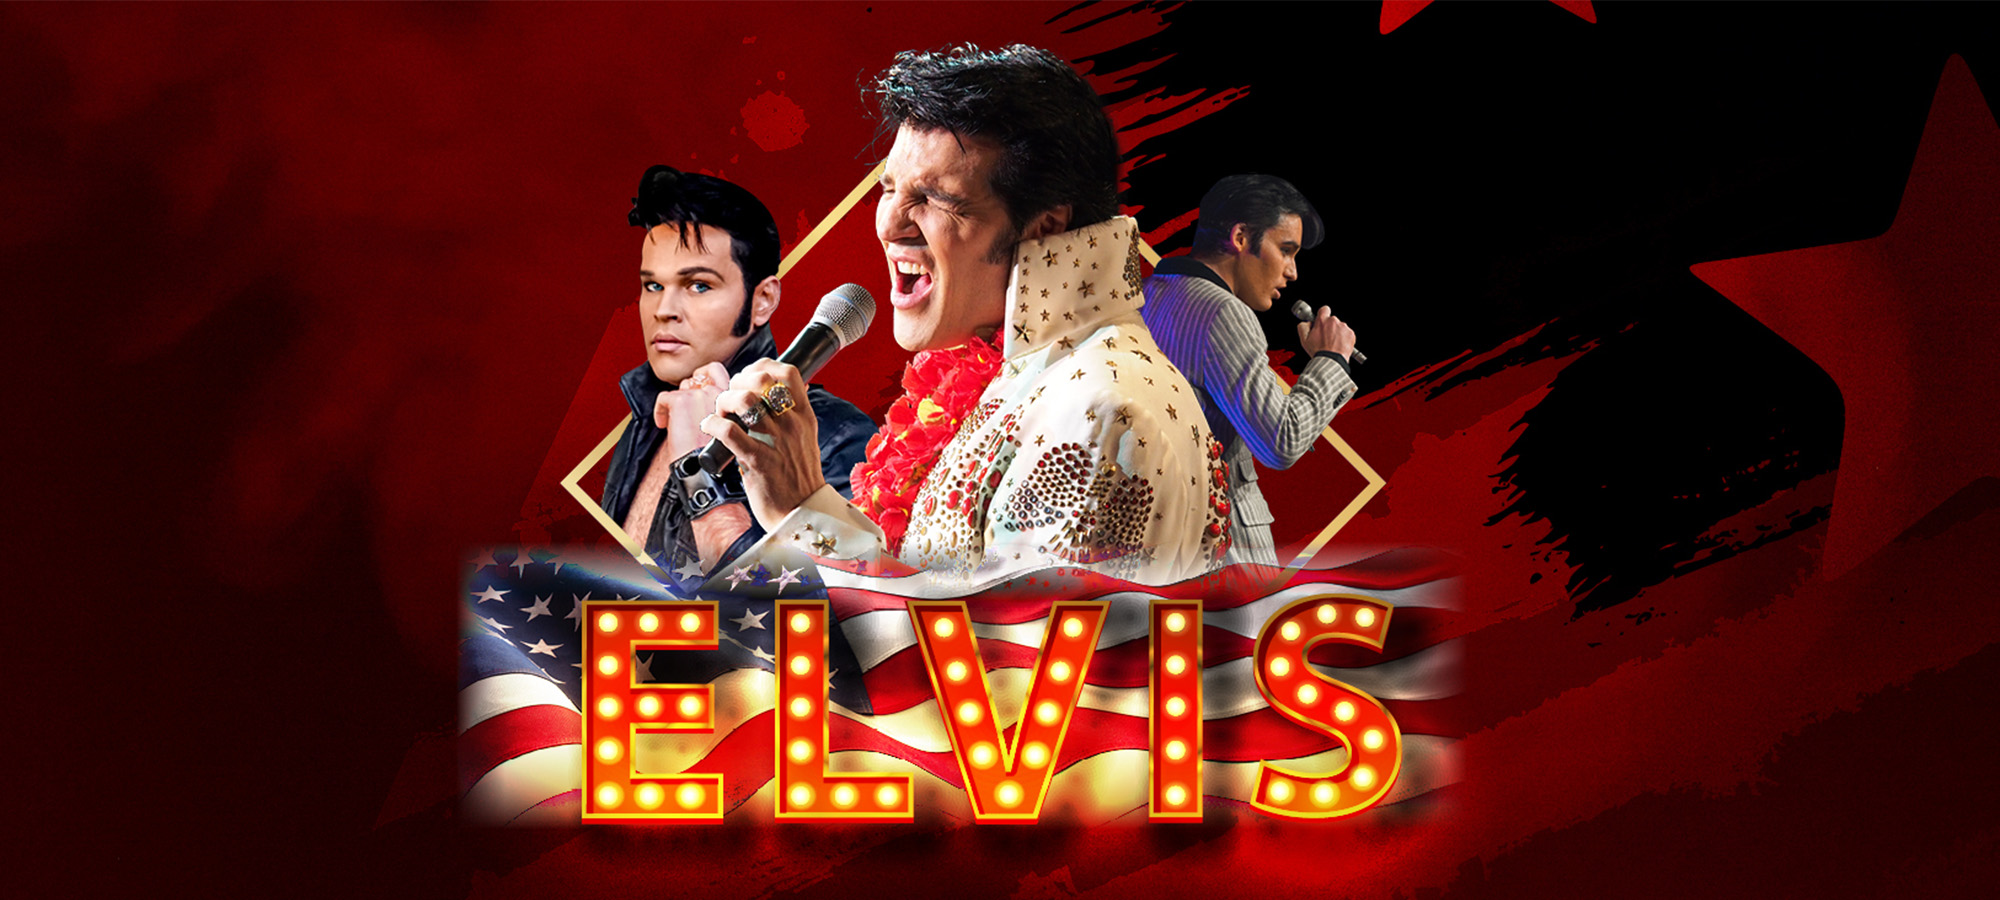 Elvis – An American Trilogy